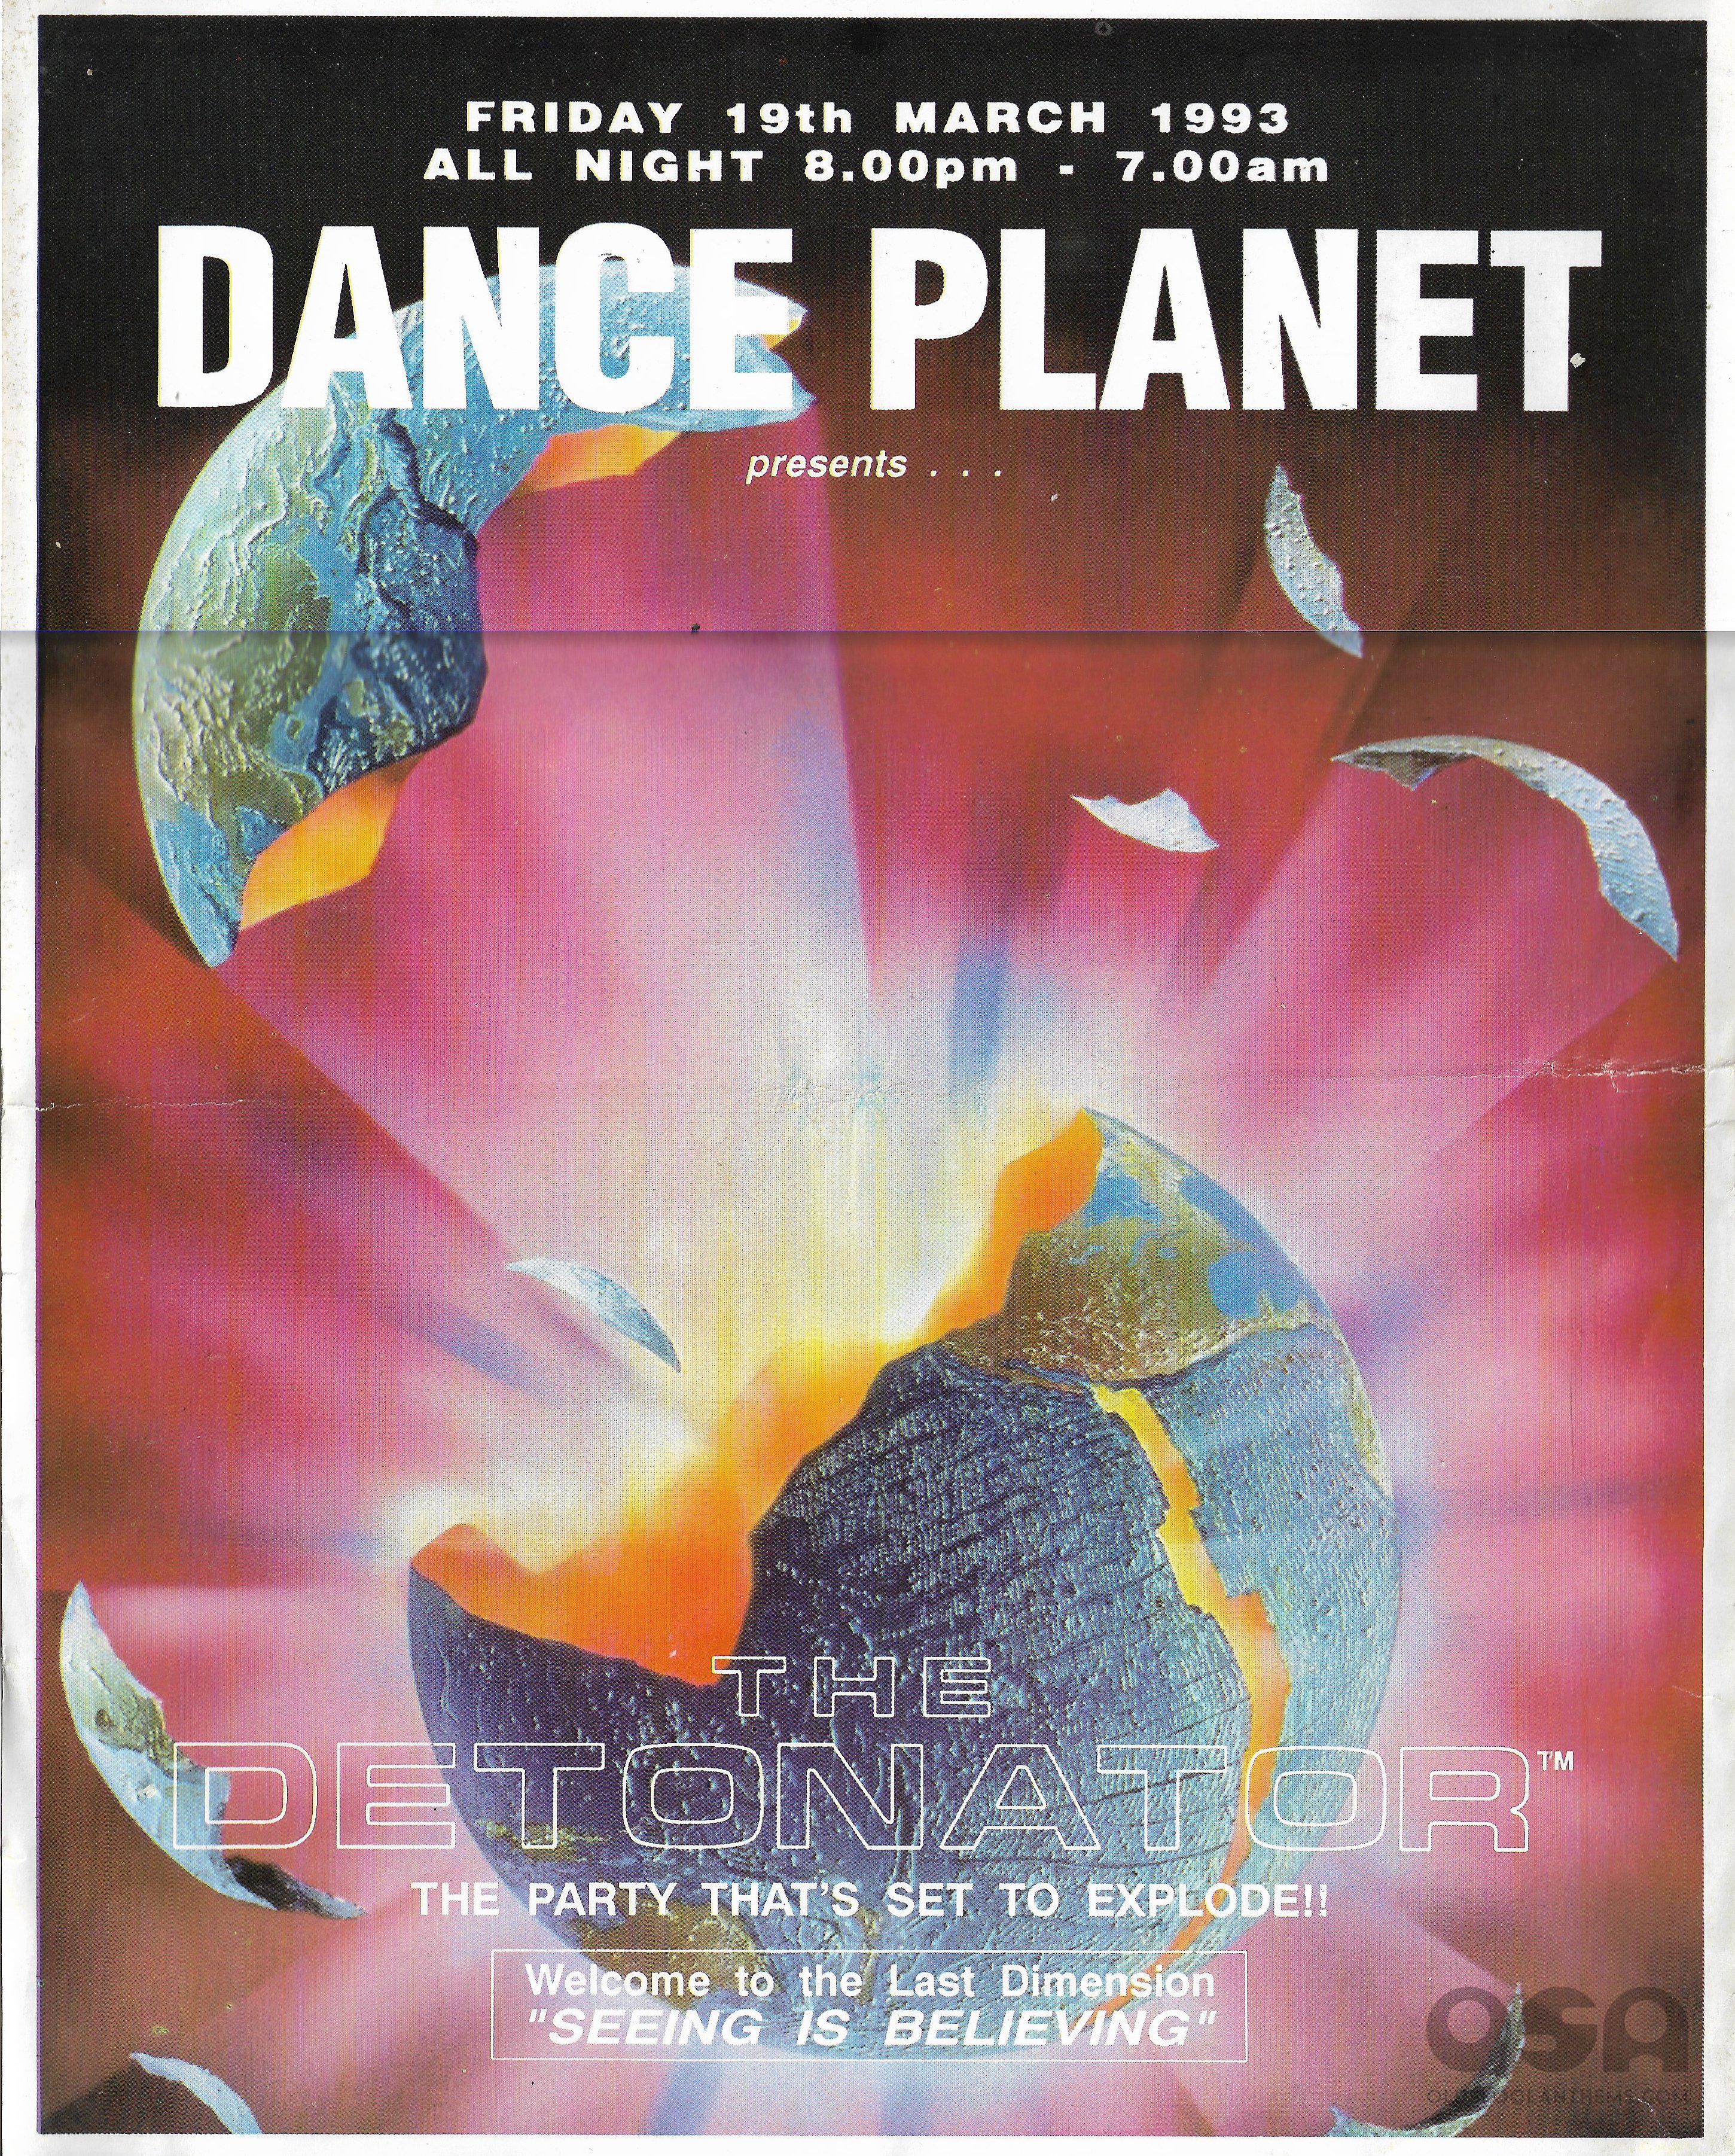 Dance Planet -The Detonator - @ The Hummingbird - Birmingham - 19th March 1993 - A .jpg